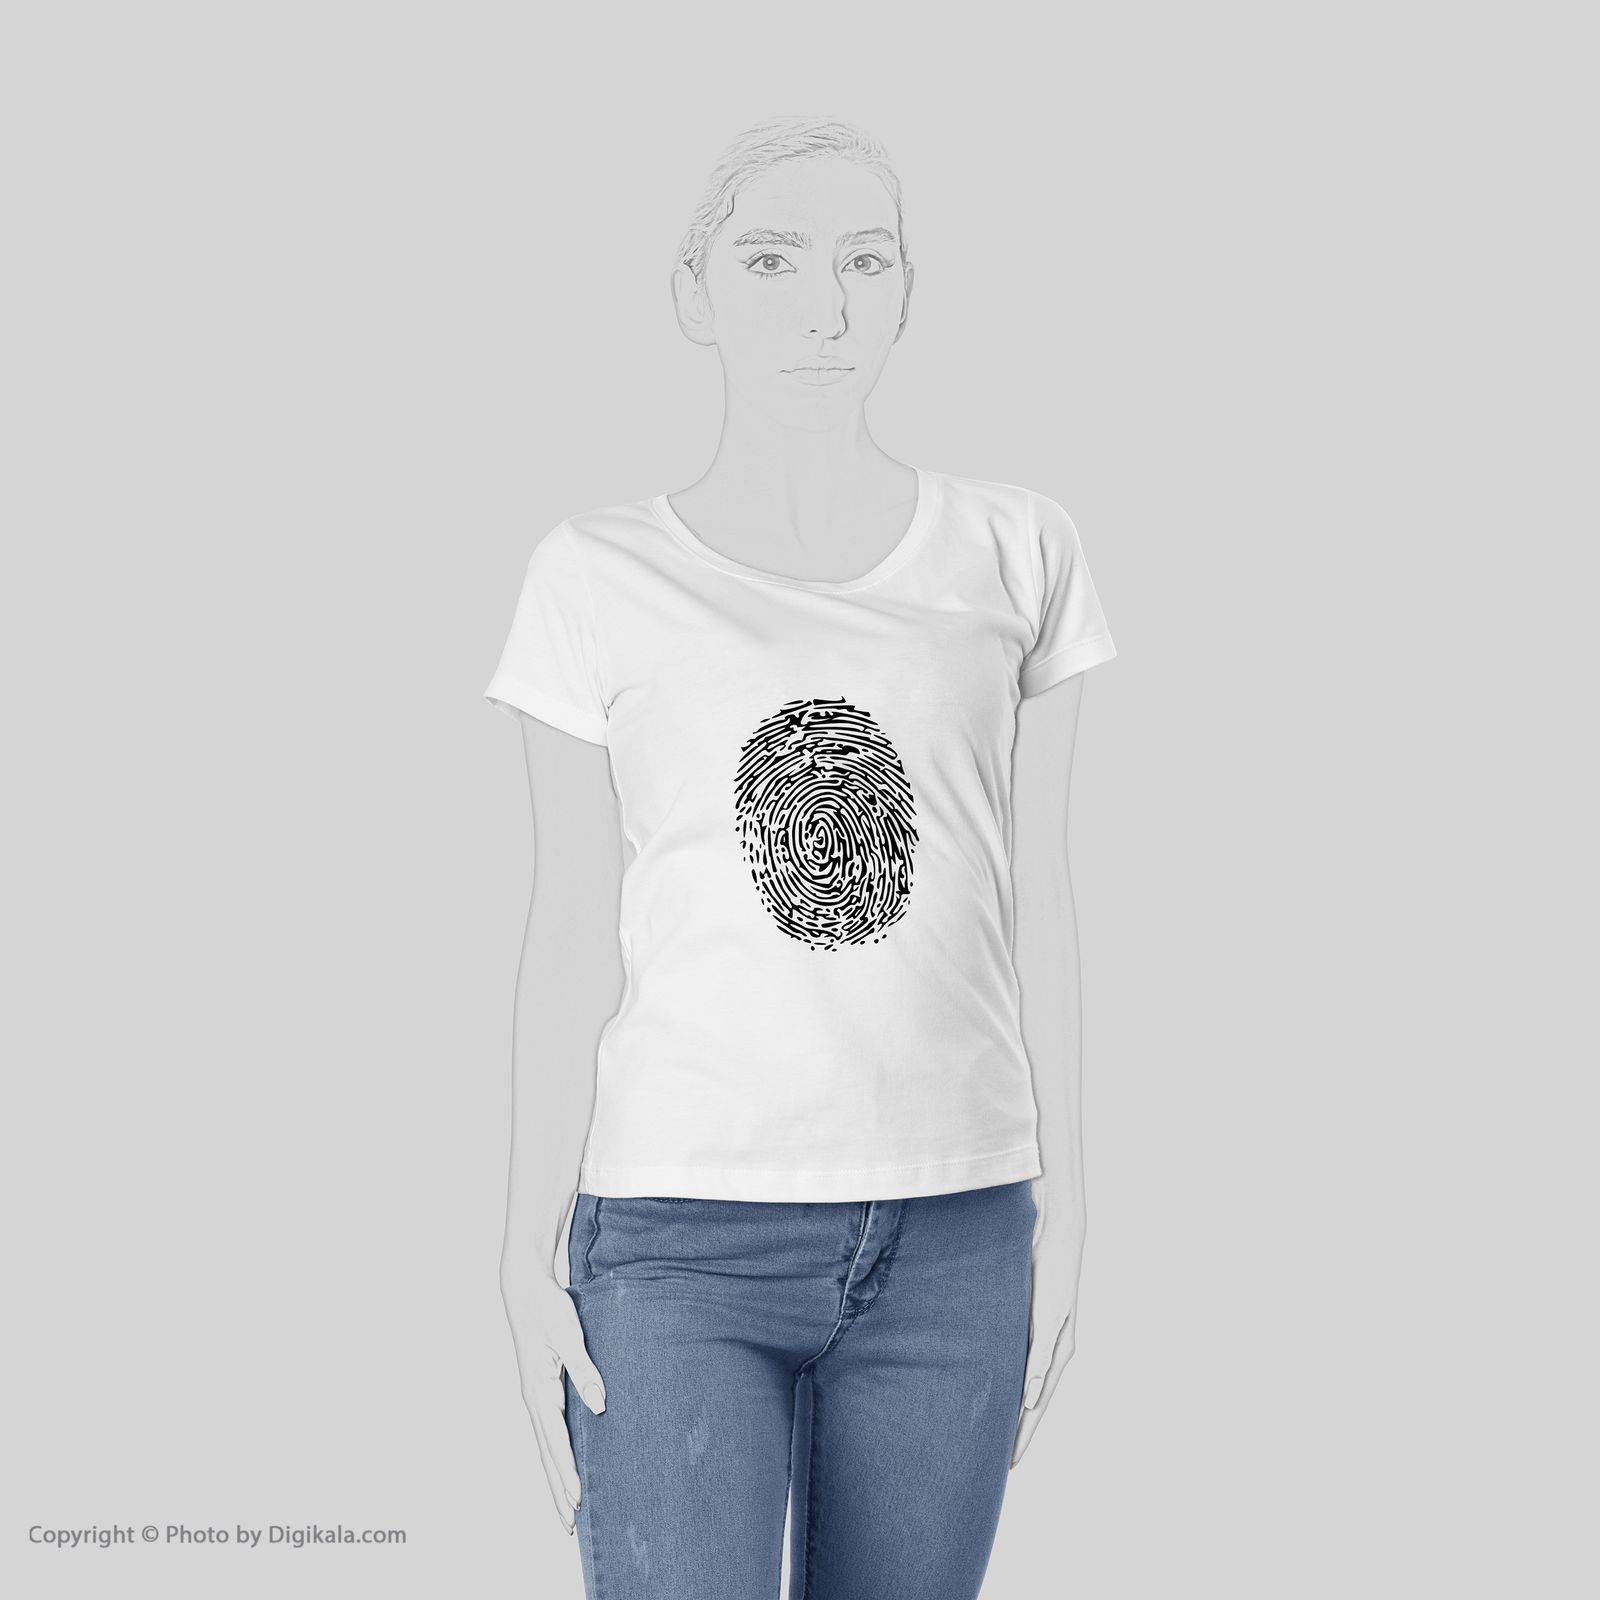 تی شرت زنانه به رسم طرح اثر انگشت کد 5553 -  - 5